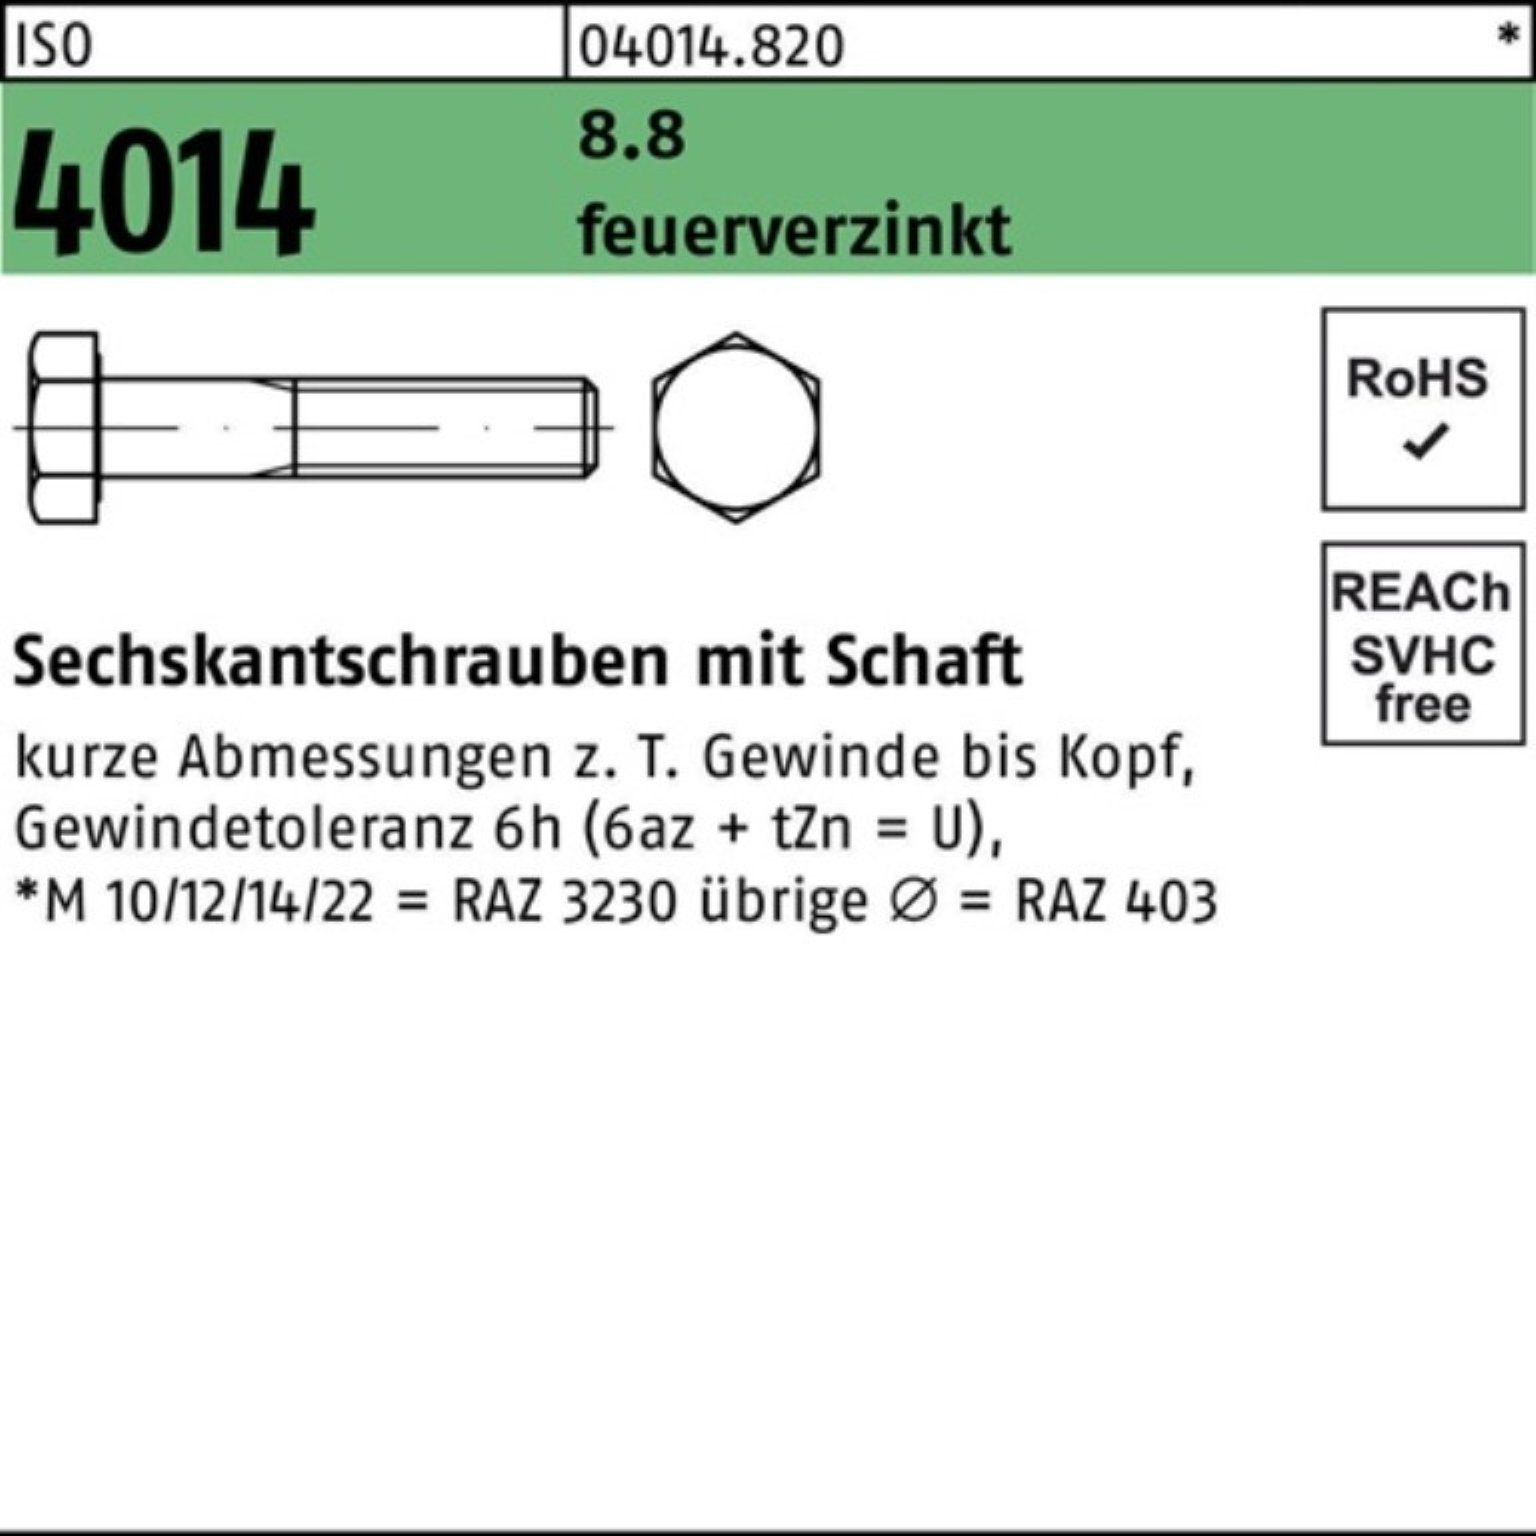 Bufab Sechskantschraube 100er Pack Sechskantschraube ISO 4014 Schaft M12x 160 8.8 feuerverz. 2 | Schrauben